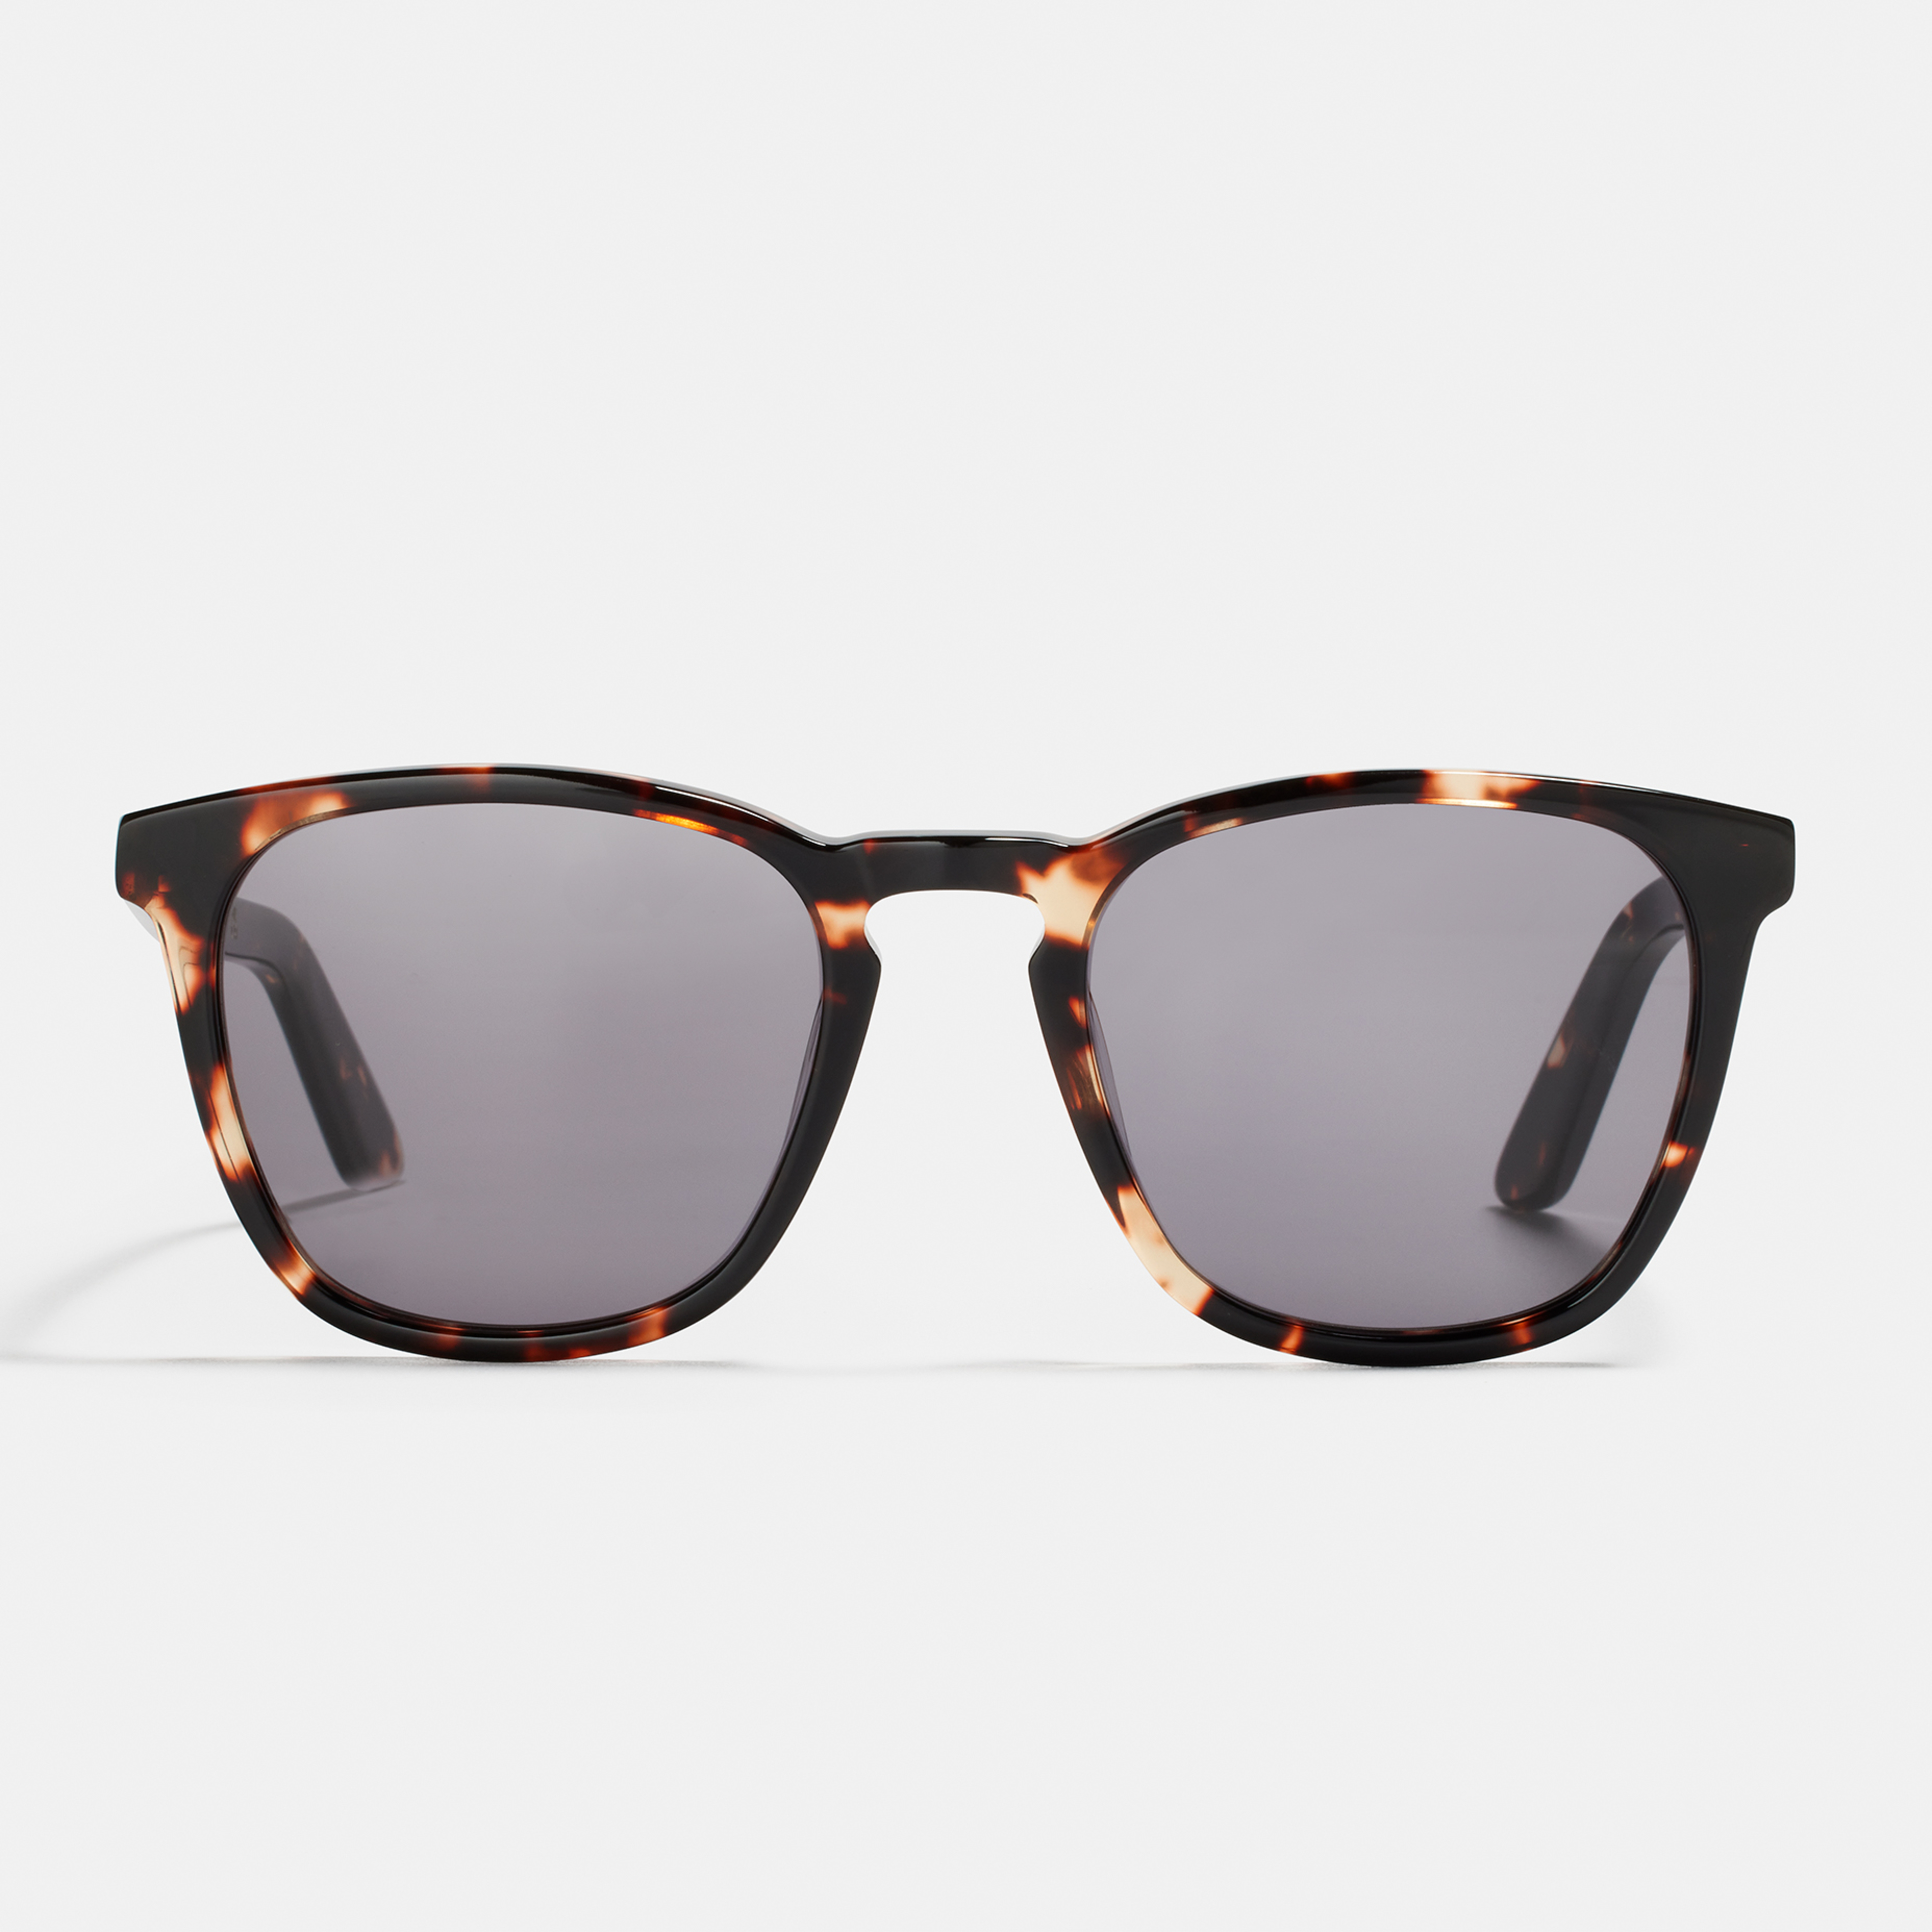 Ace & Tate Sunglasses | Square Acetate in Brown